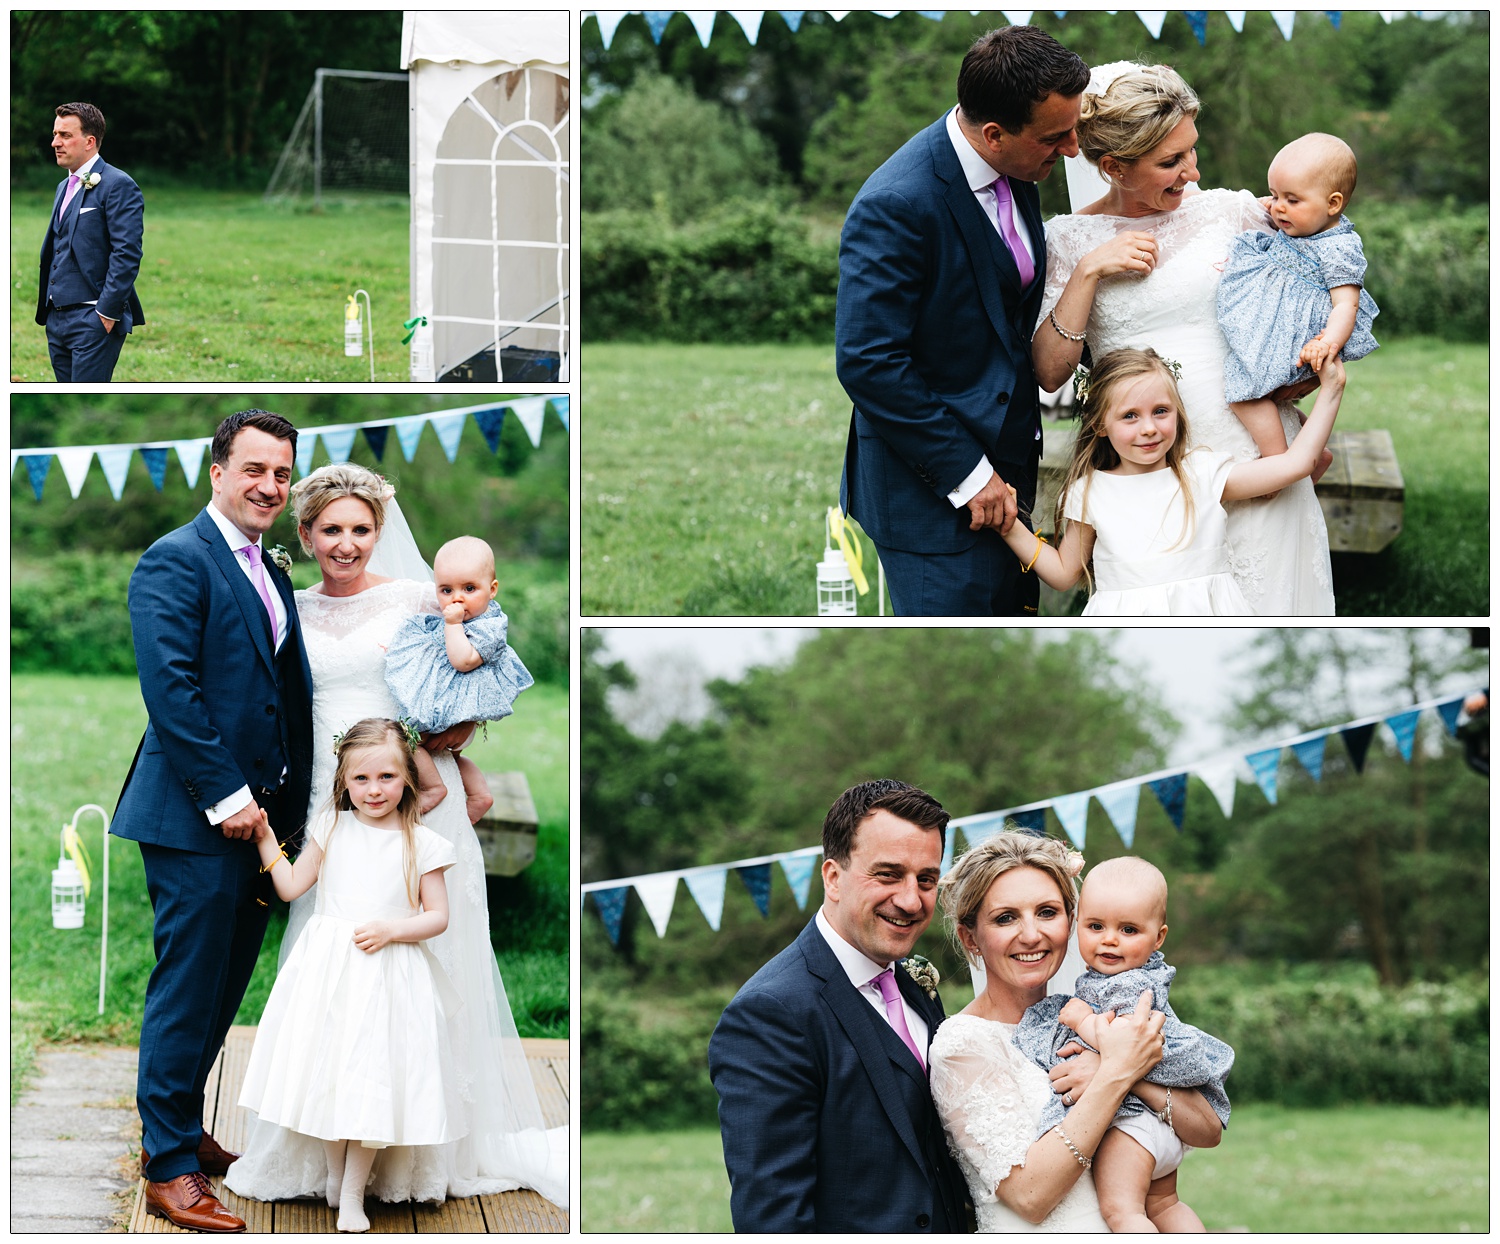 family photographs at a wedding at Swanton Village hall